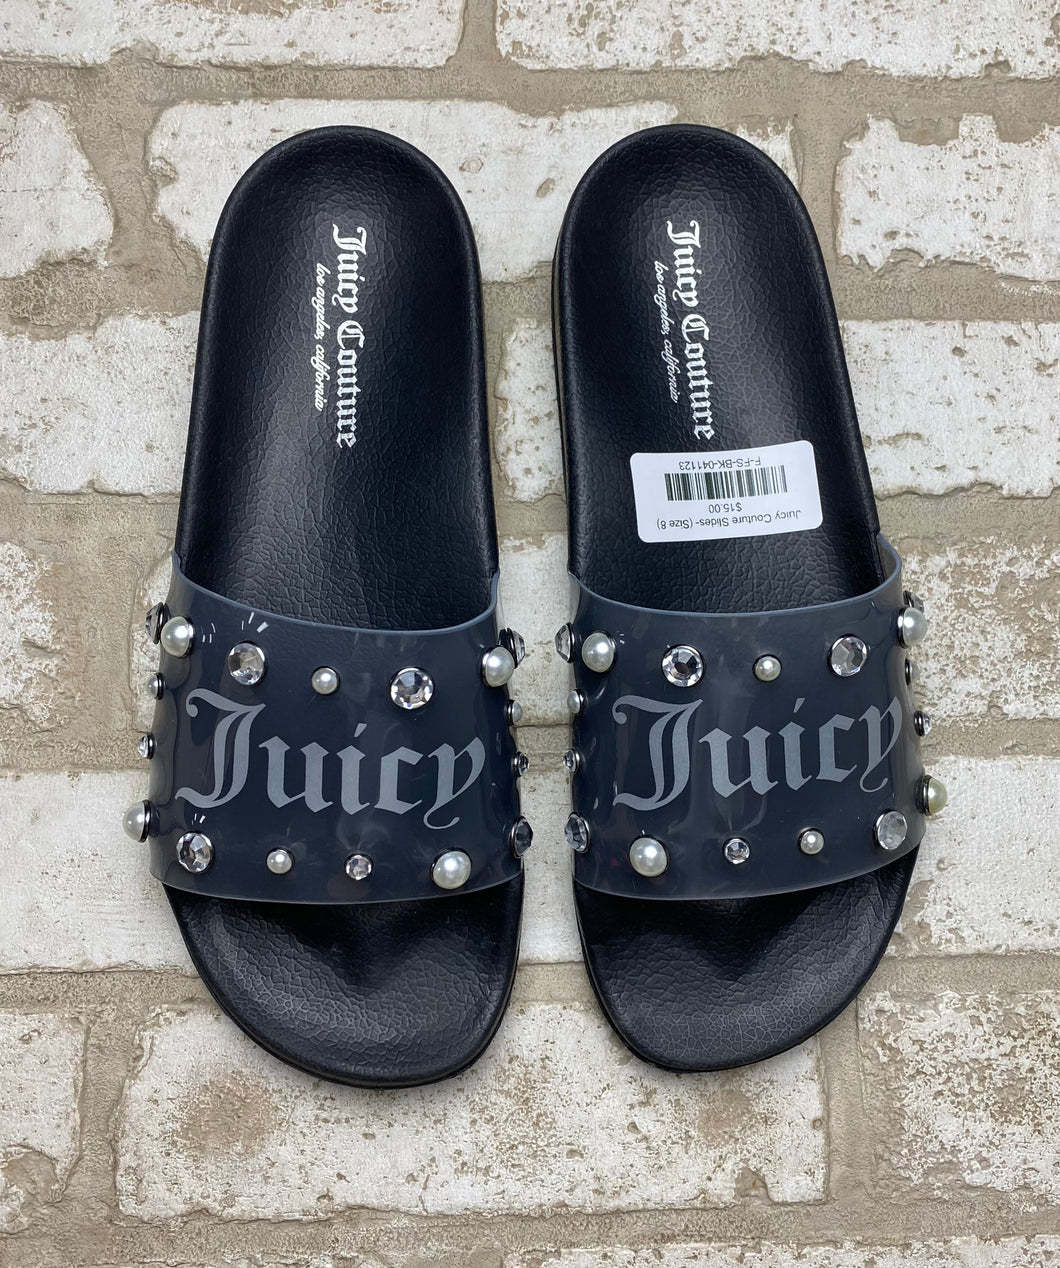 Juicy Couture Slides- (Size 8)